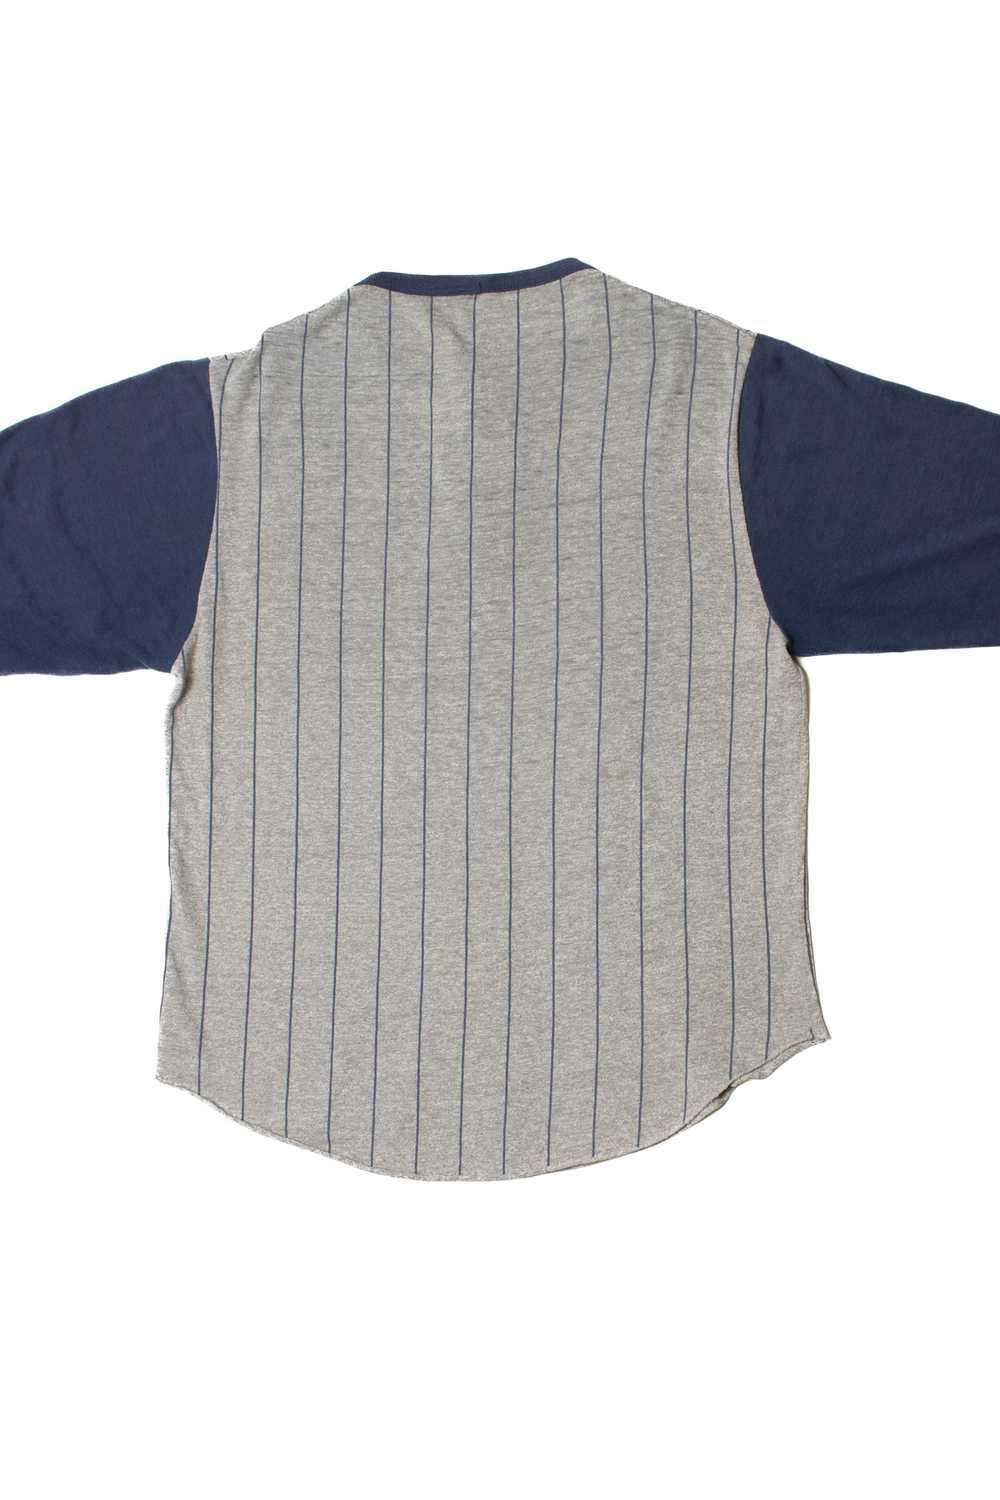 Vintage "Brooklyn" Navy Striped Raglan T-Shirt - image 3